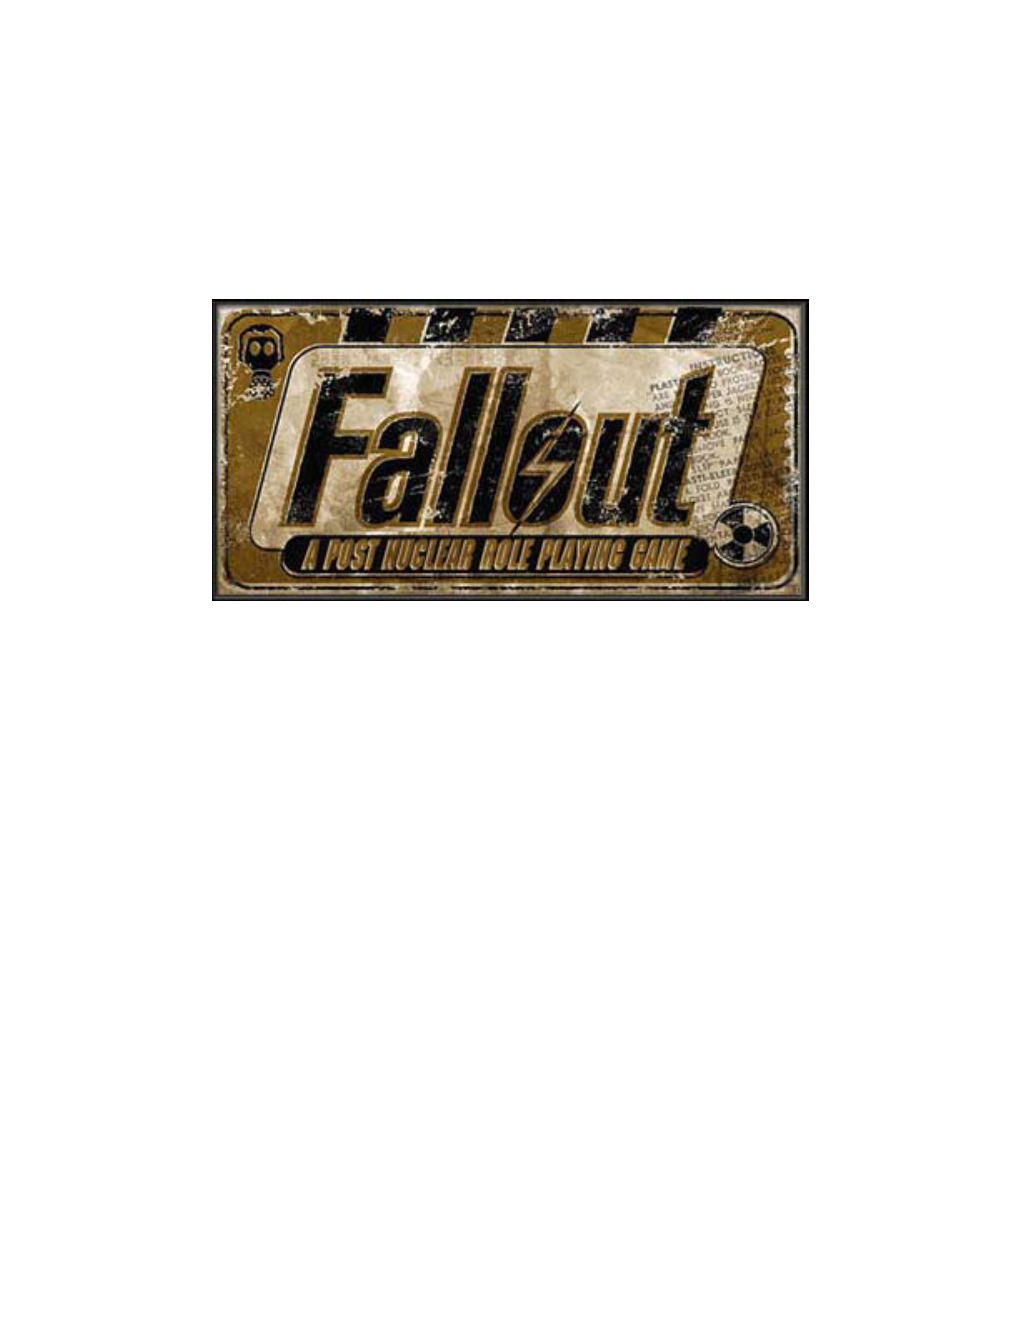 Fallout Universe